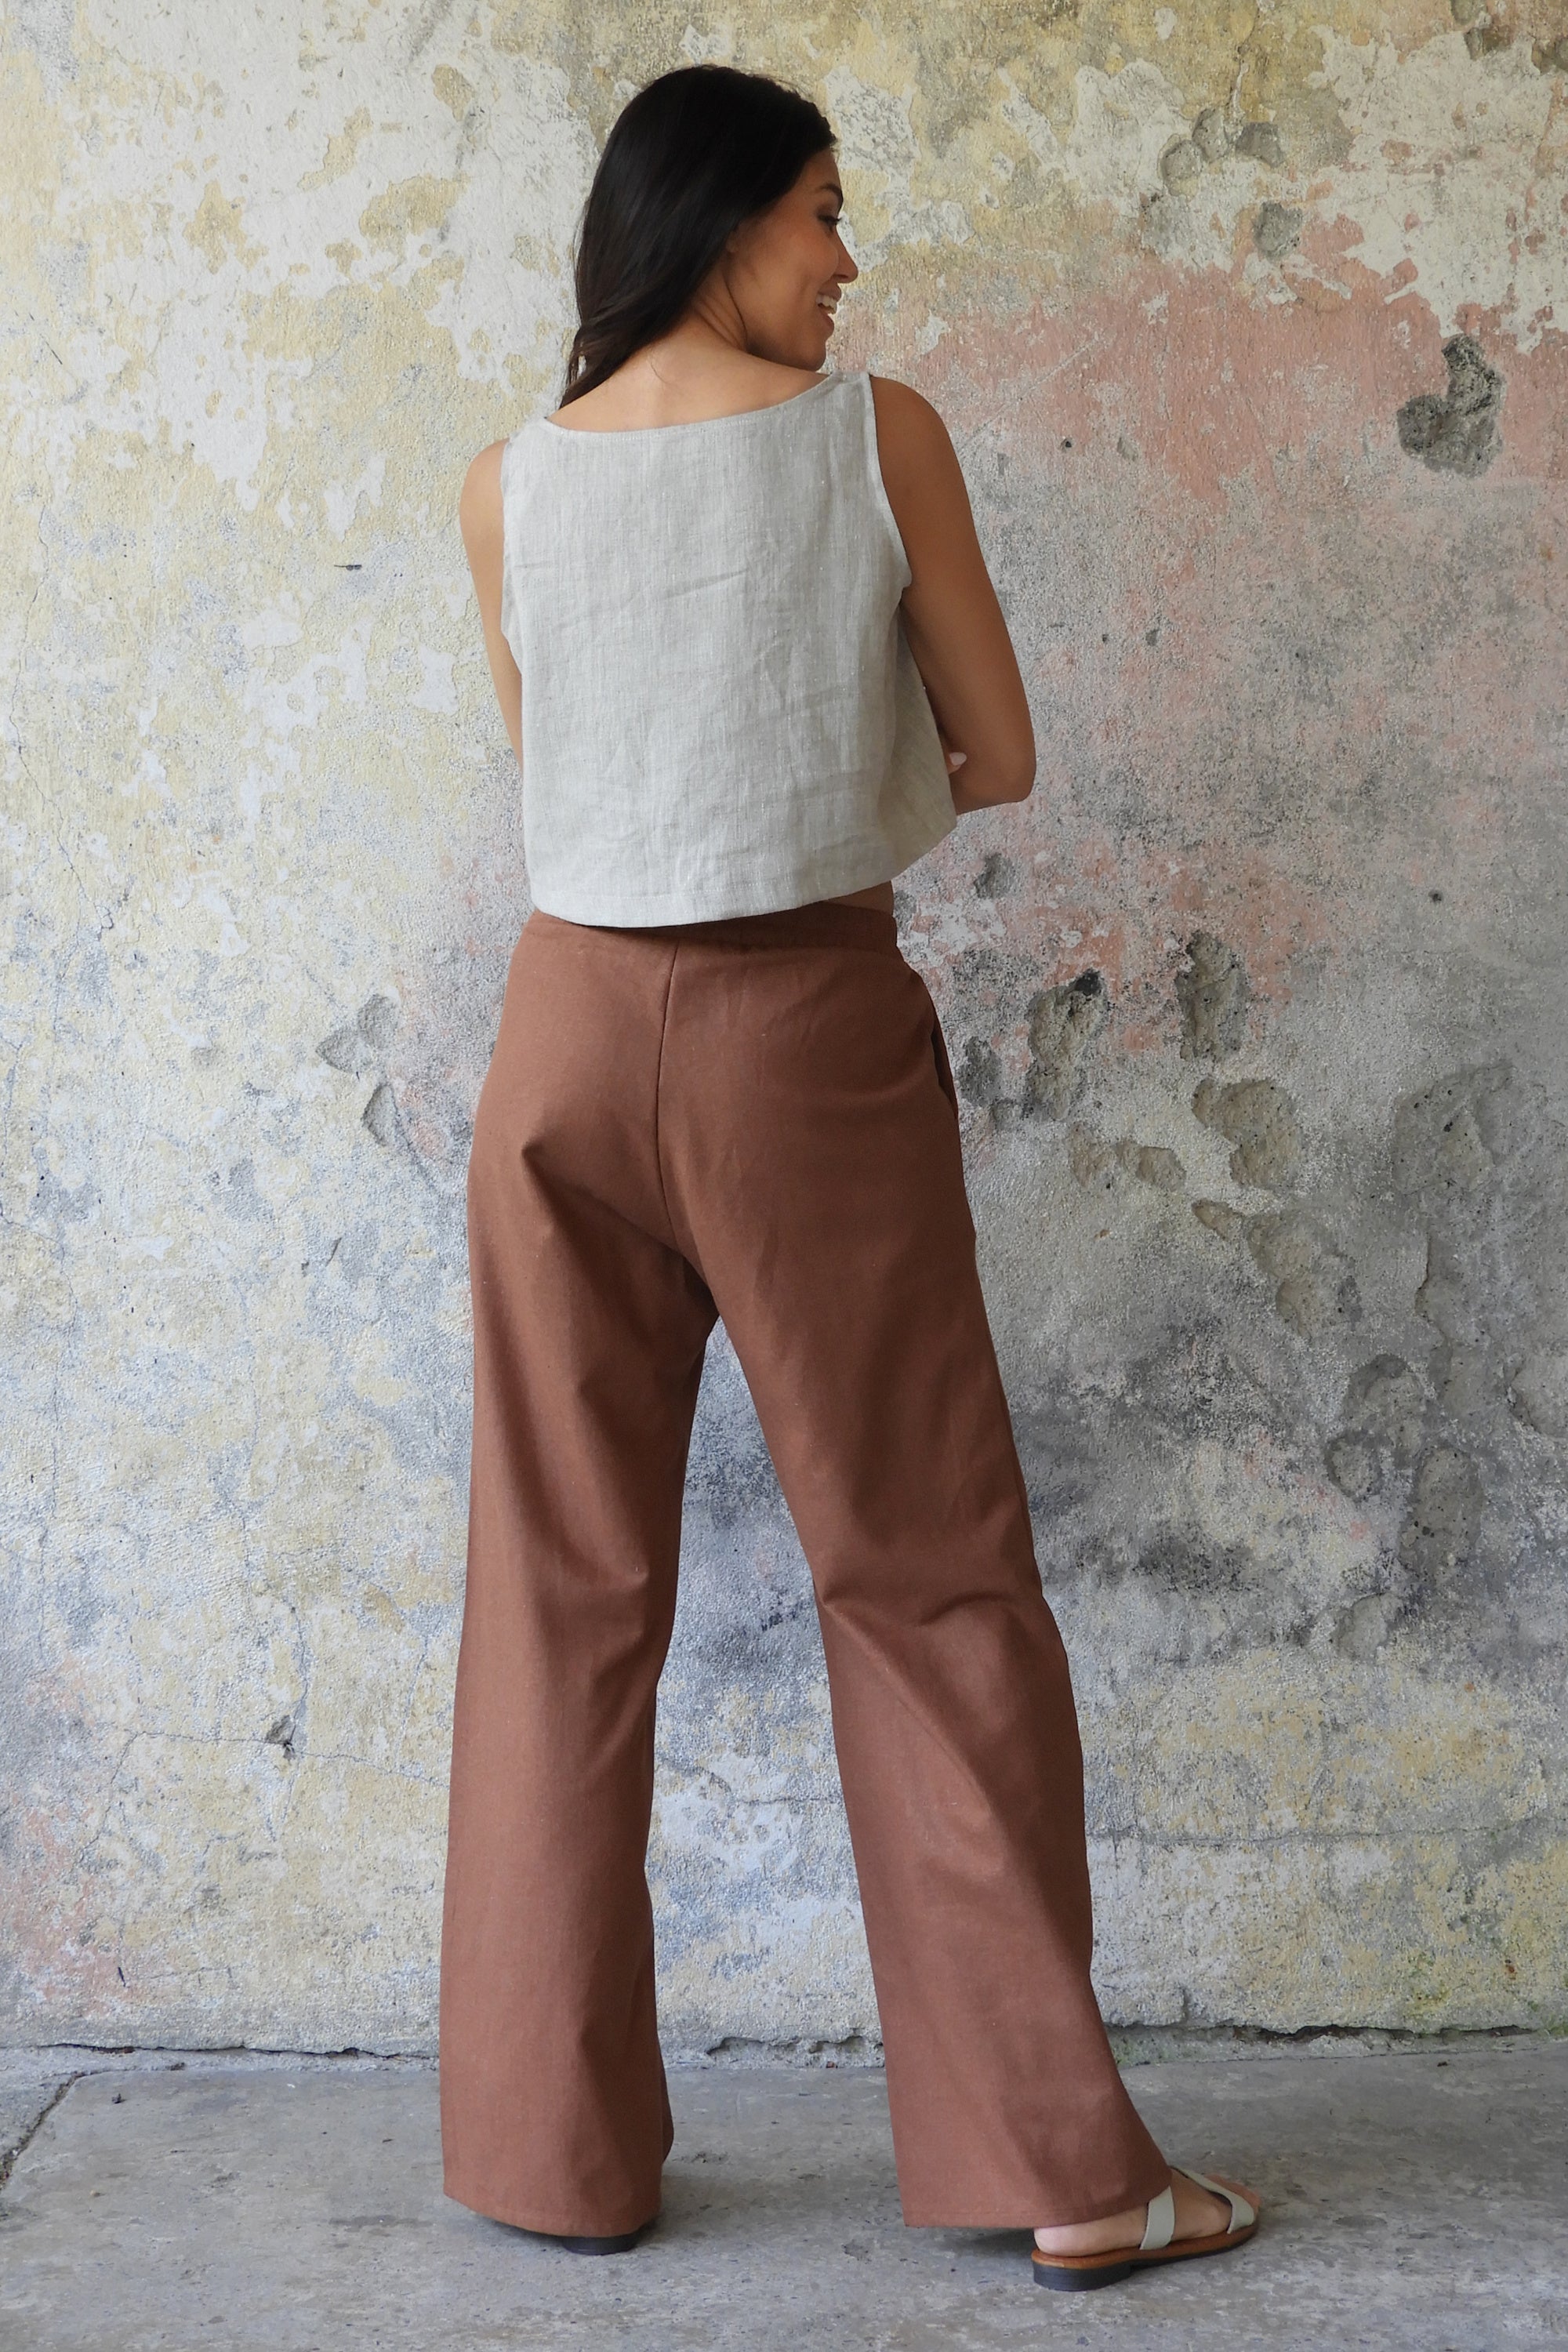 Sustainable  | TRINITY Linen Blend Women's Pants (Burnt Orange, Brown) by Odana's